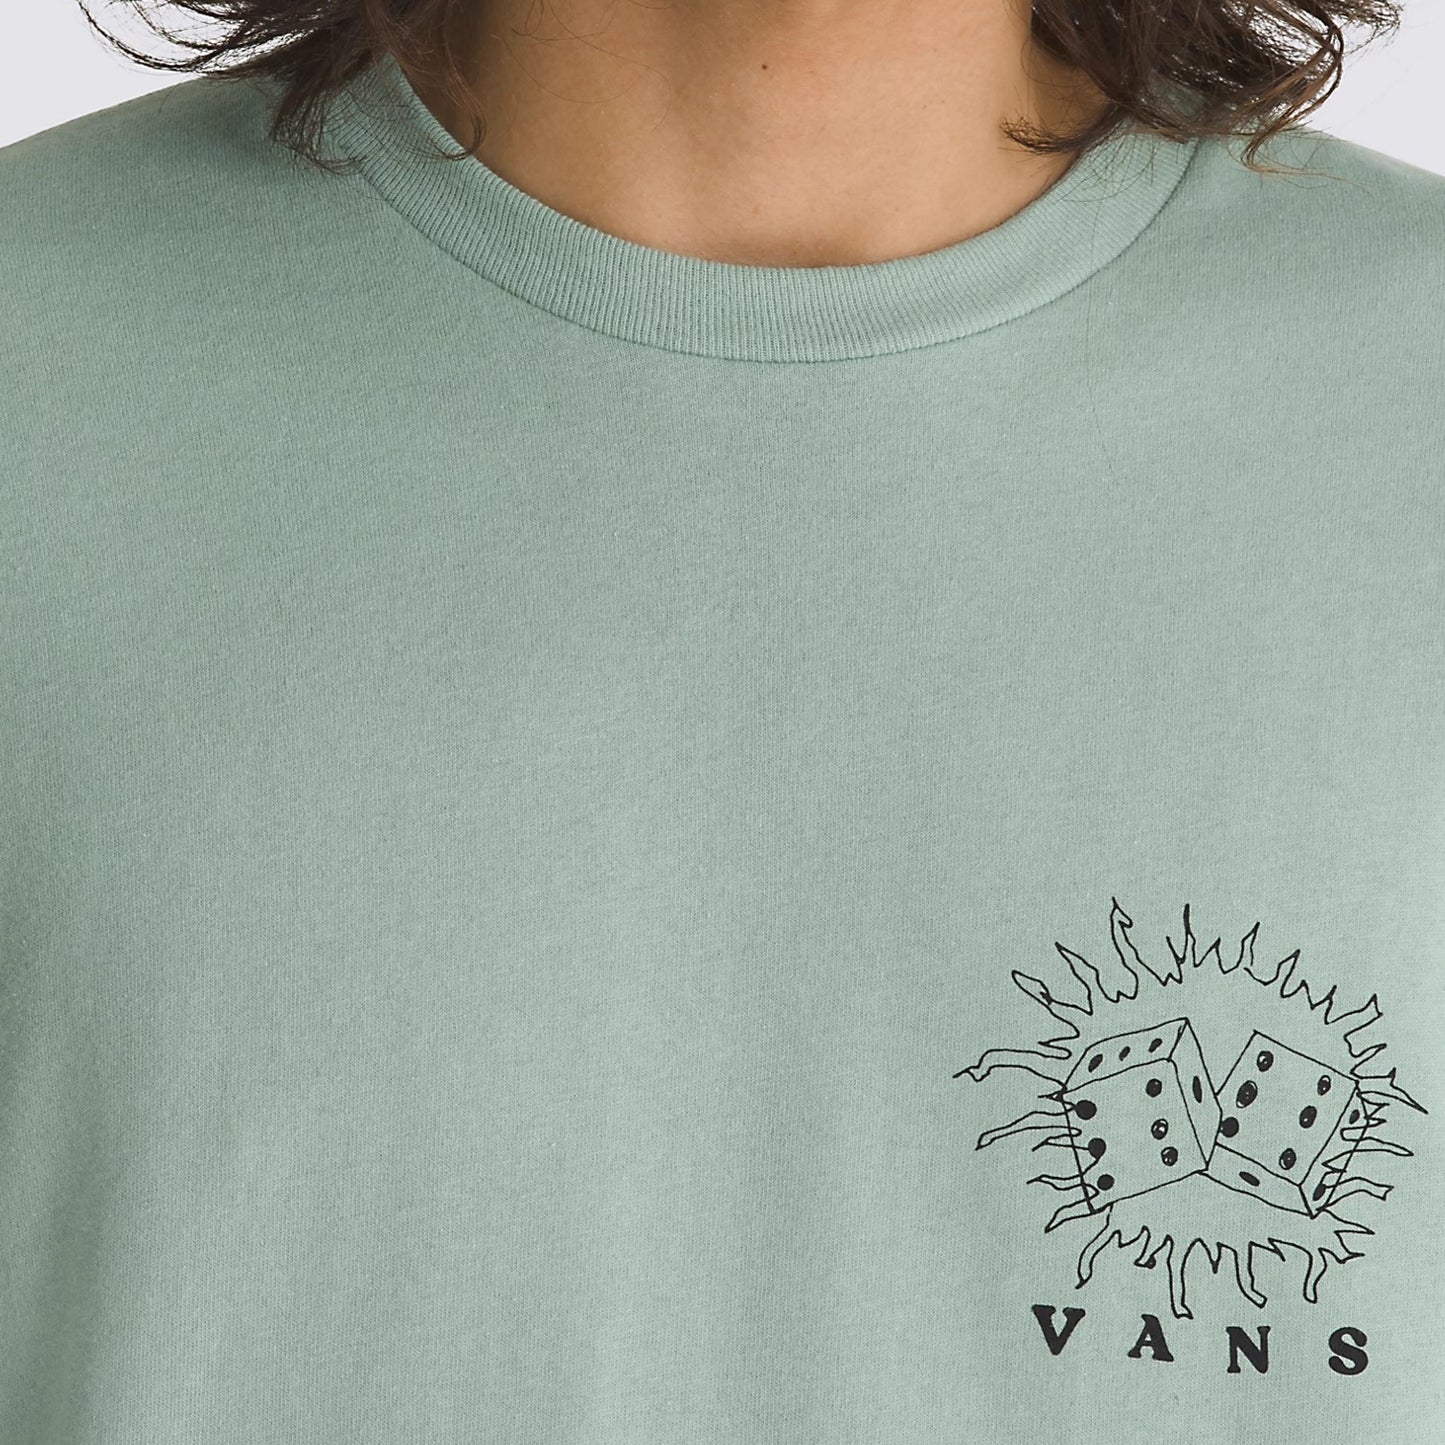 VANS Expand Visions T-Shirt